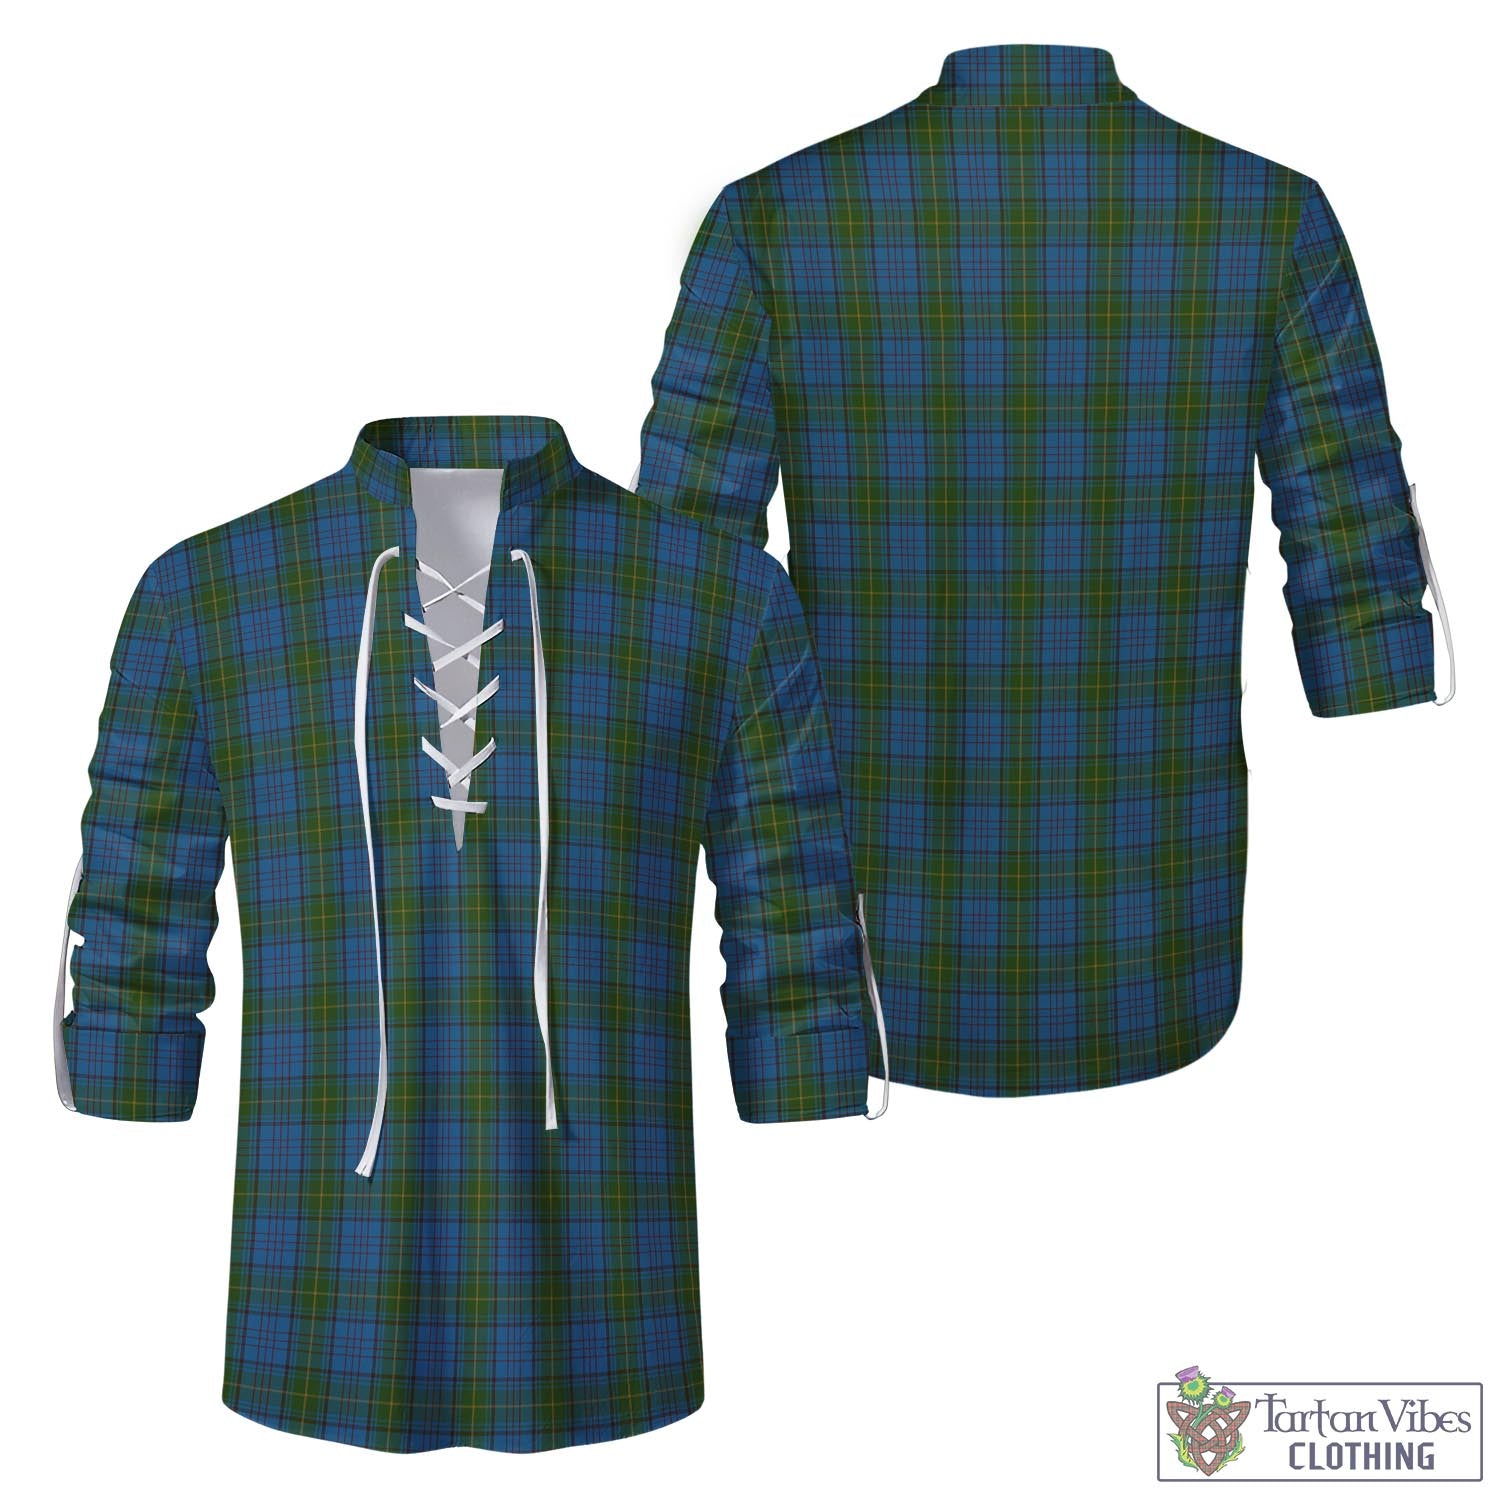 Tartan Vibes Clothing Donegal County Ireland Tartan Men's Scottish Traditional Jacobite Ghillie Kilt Shirt